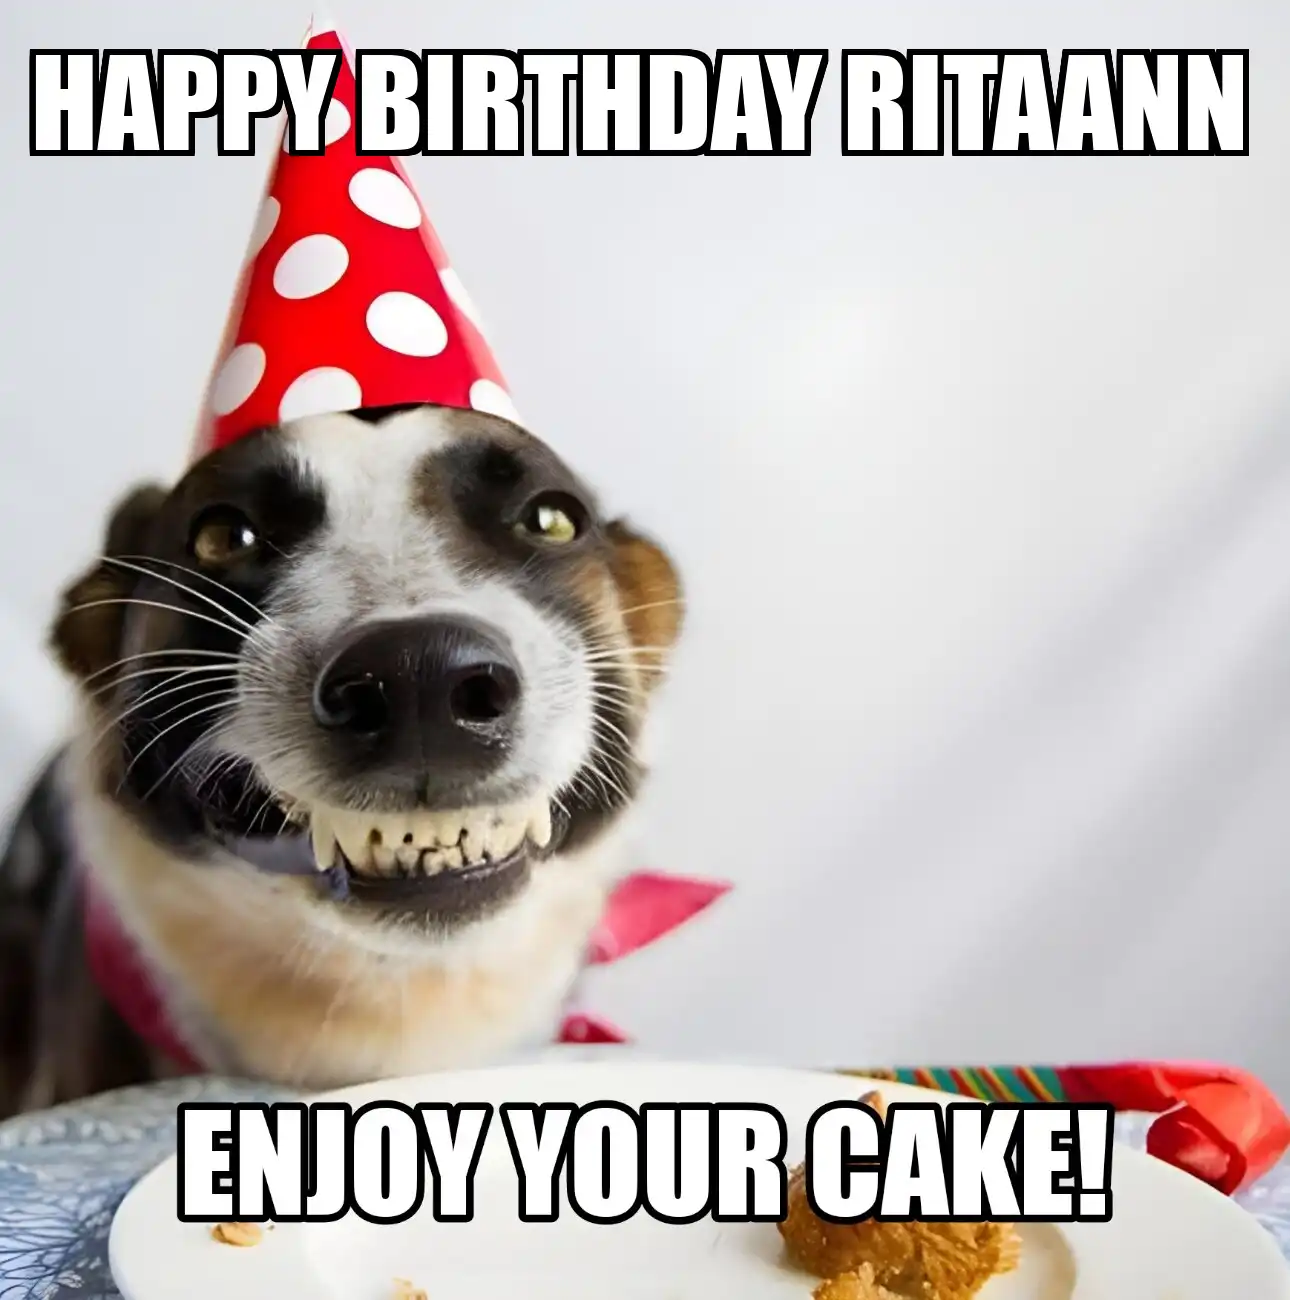 Happy Birthday Ritaann Enjoy Your Cake Dog Meme